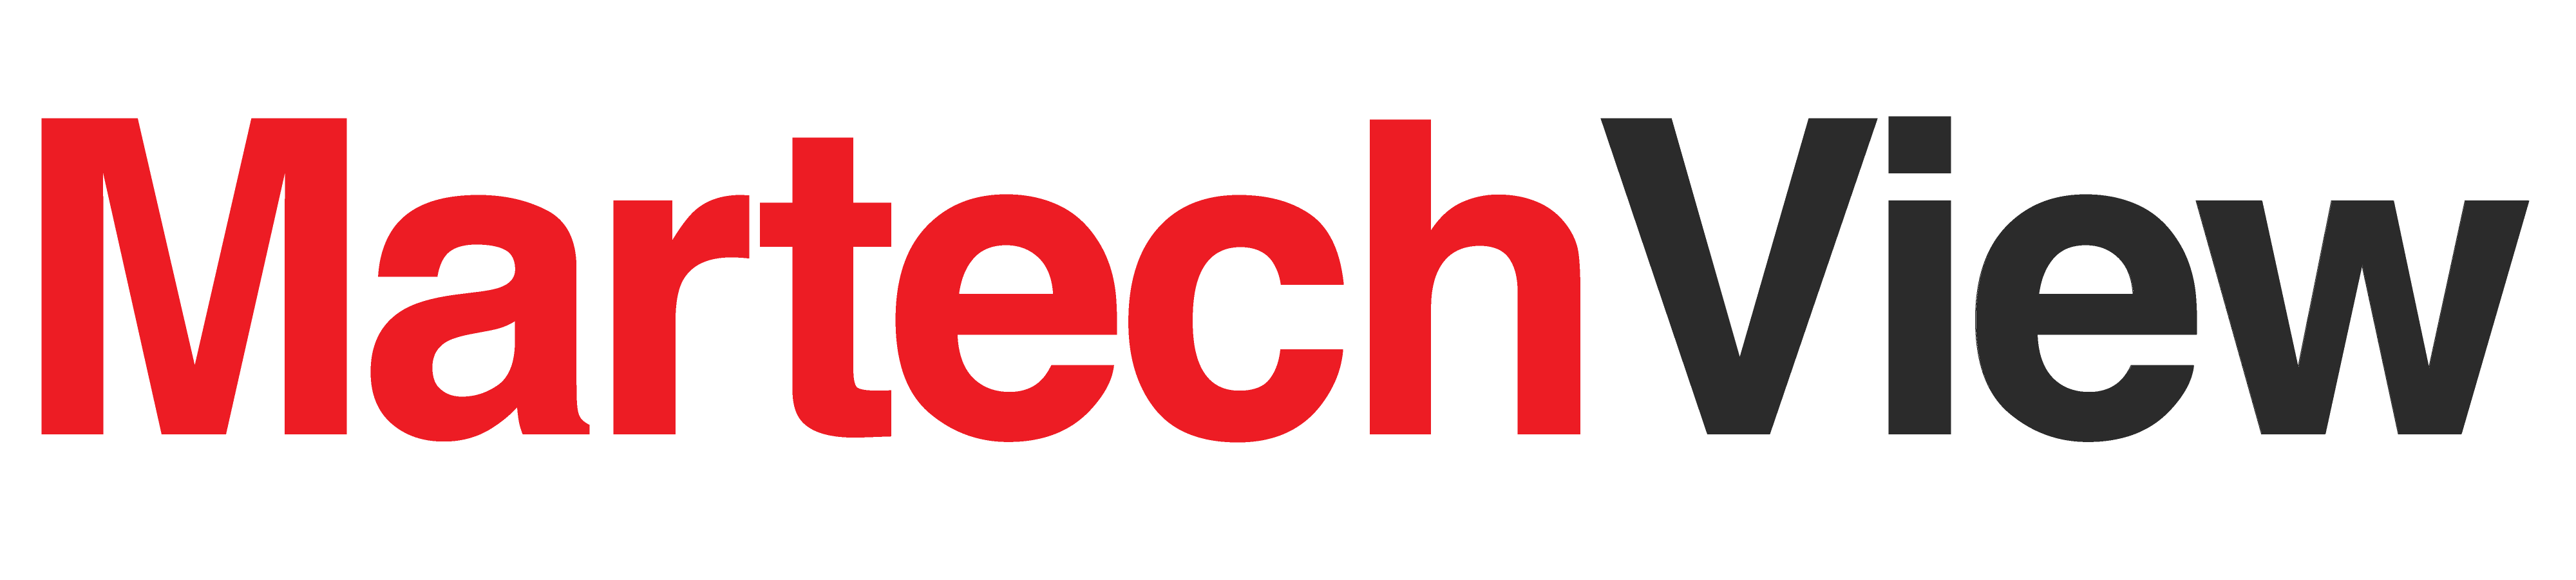 Martech-View-Logo